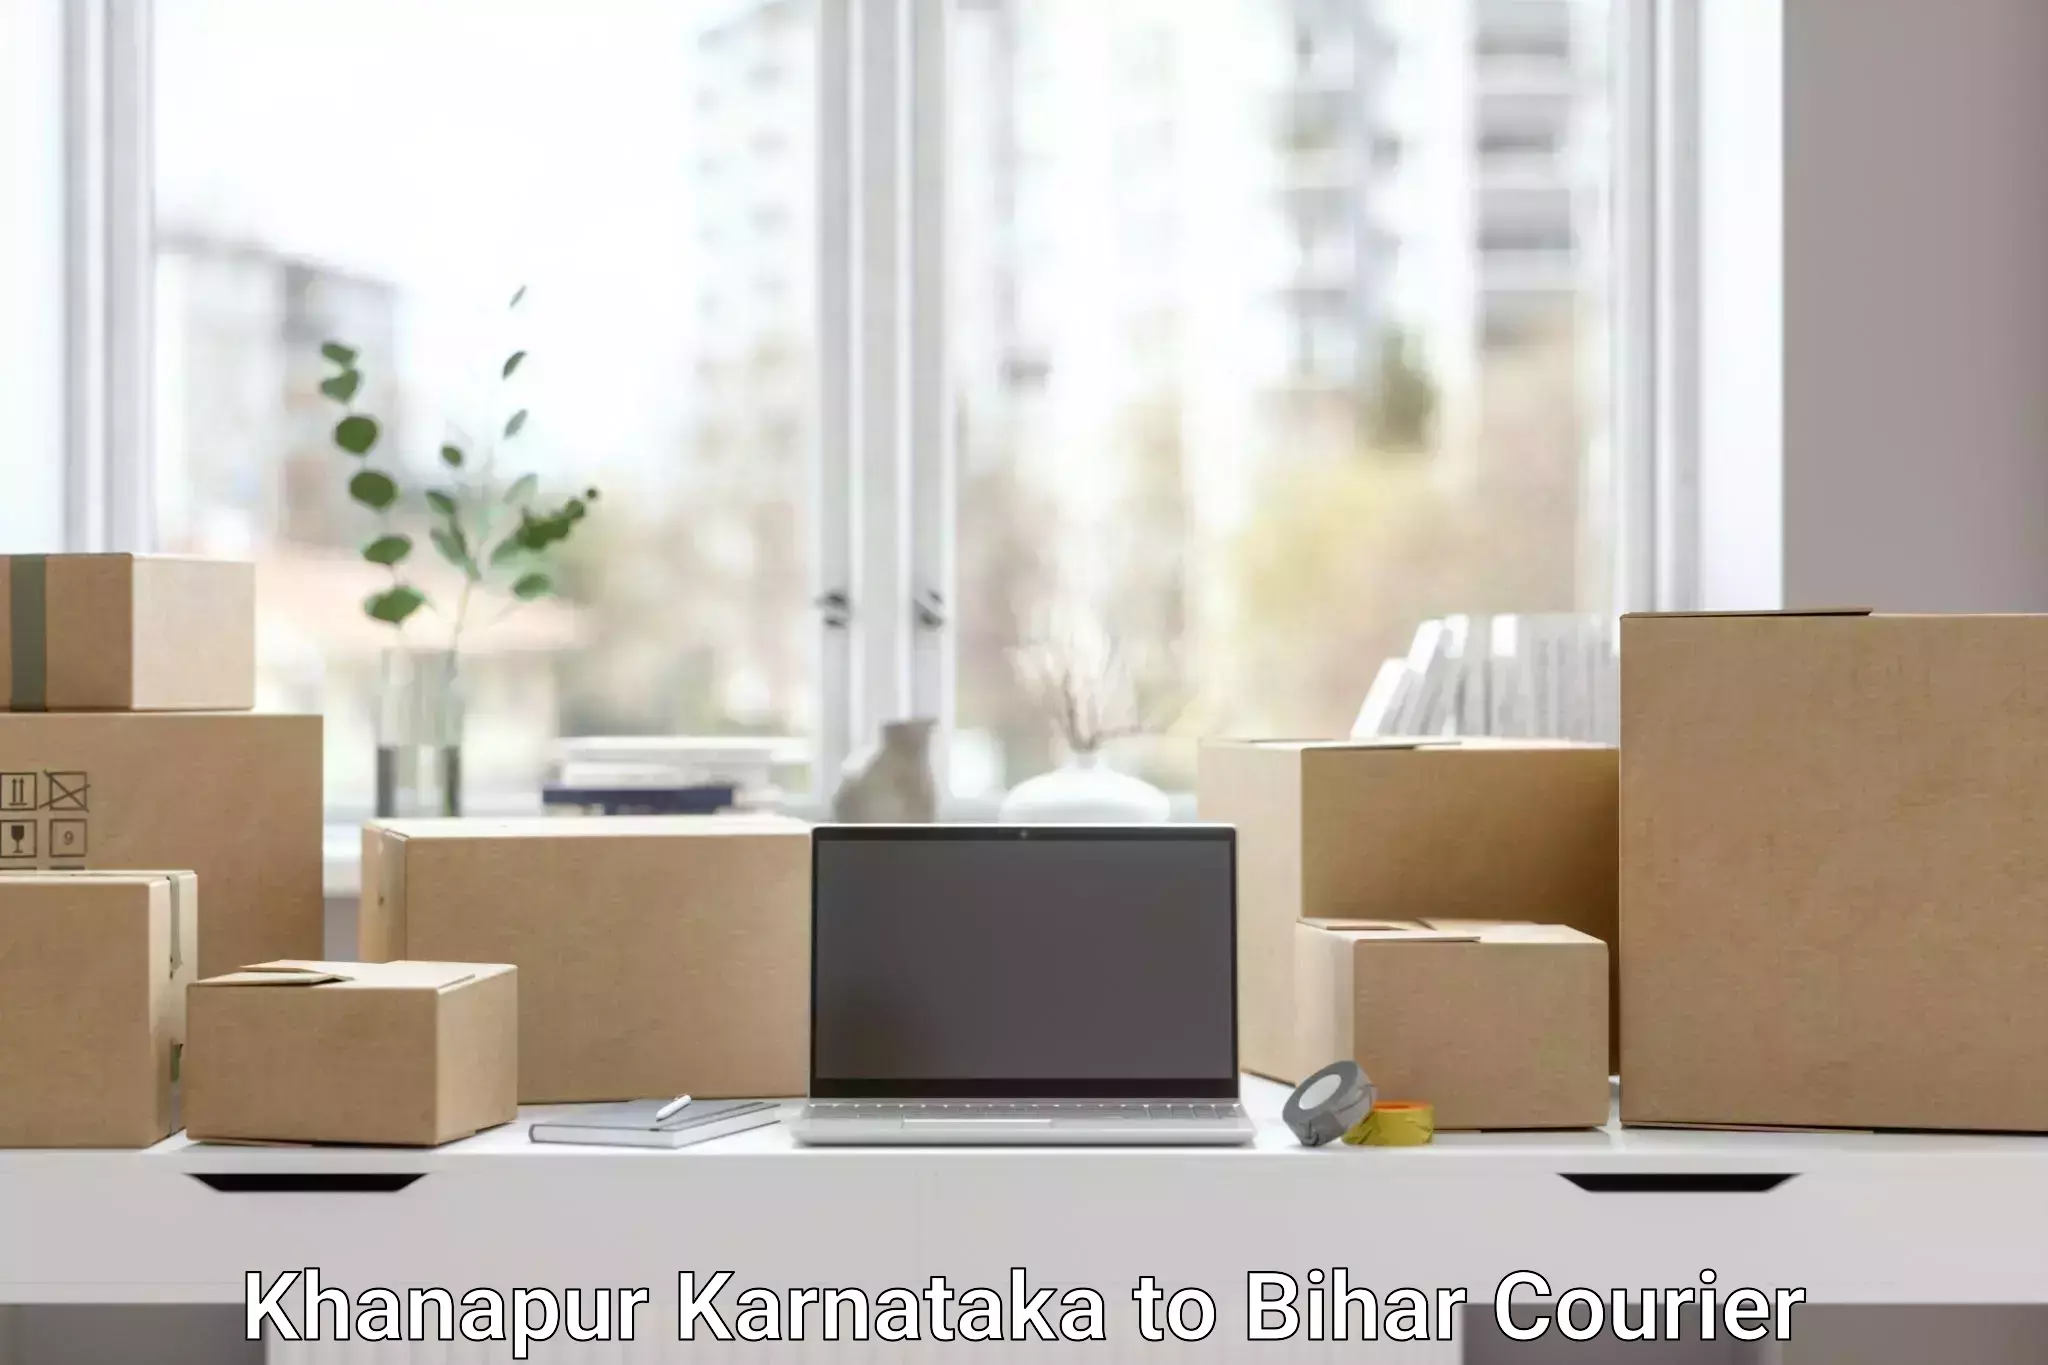 Reliable courier services in Khanapur Karnataka to Pupri